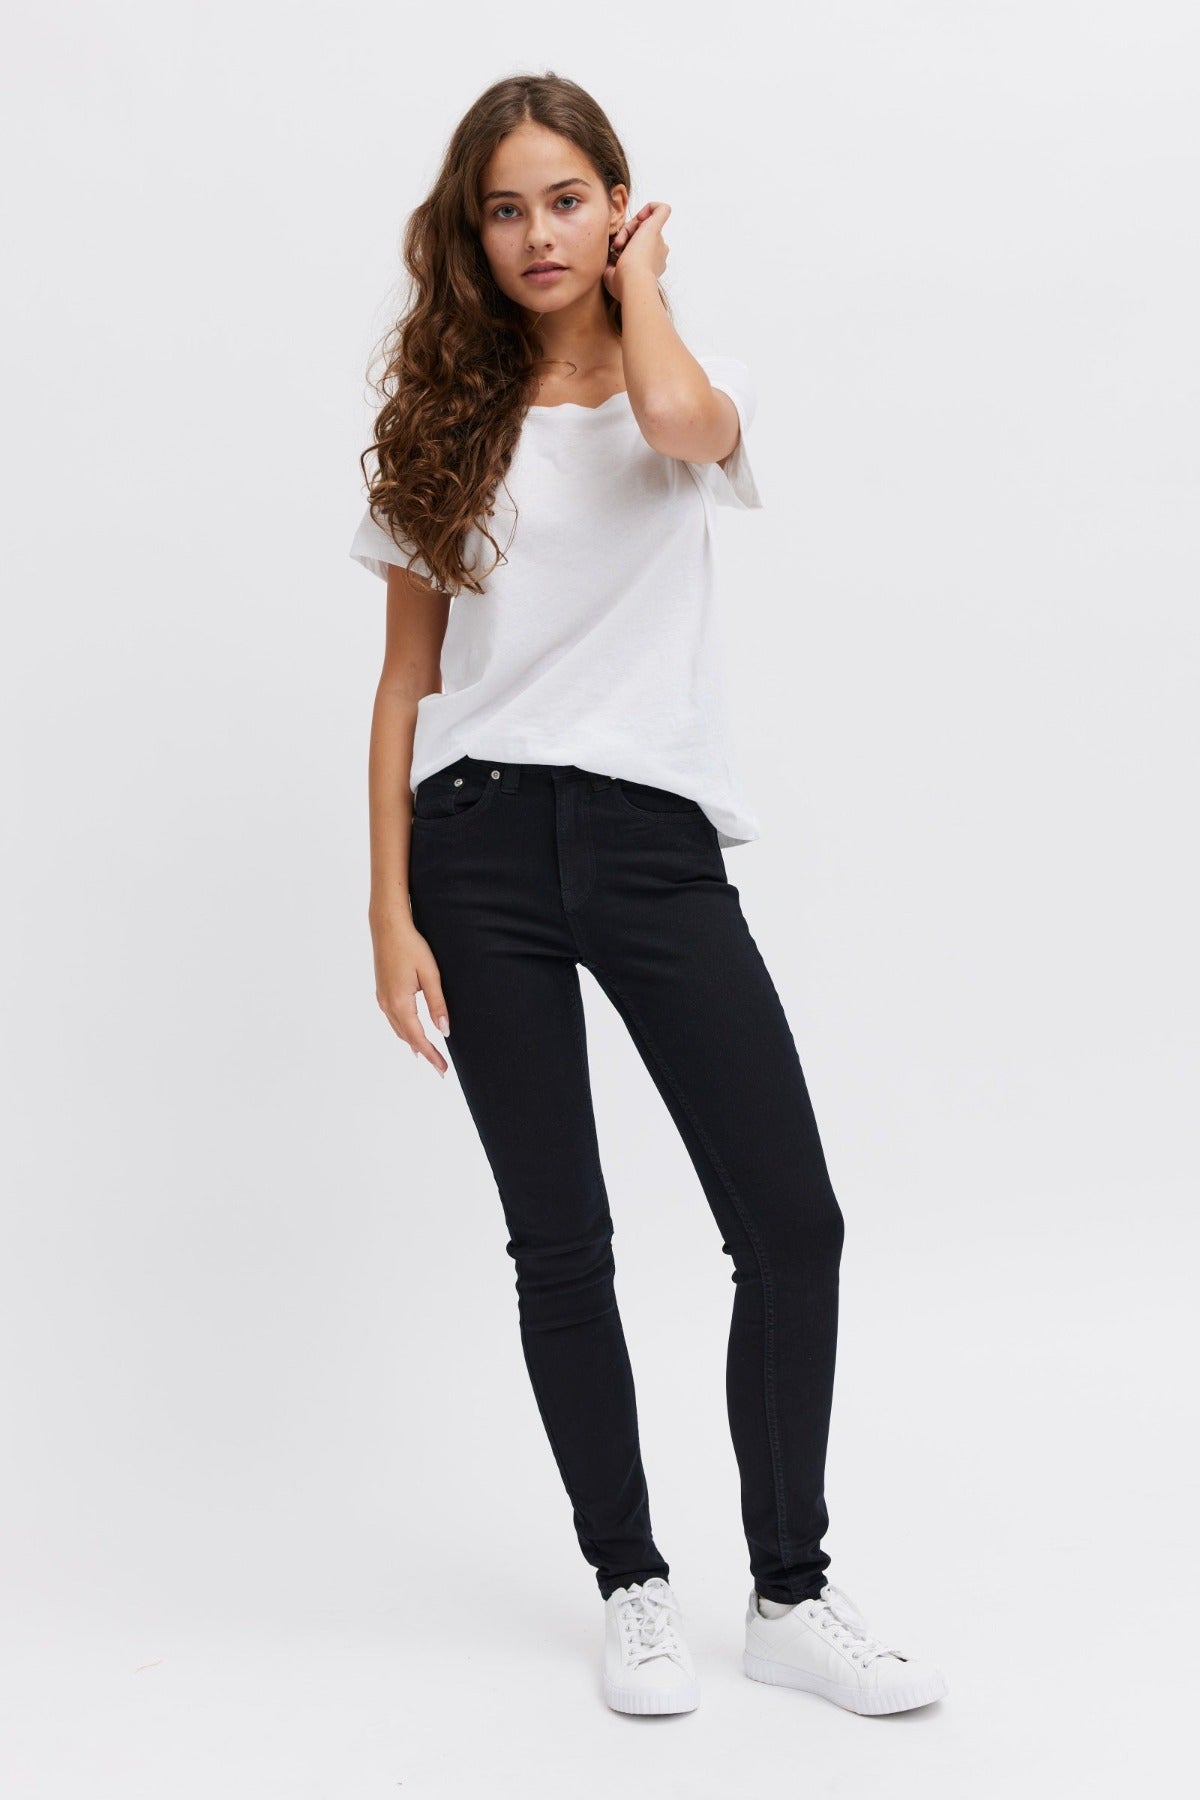 Black jeans for petite women